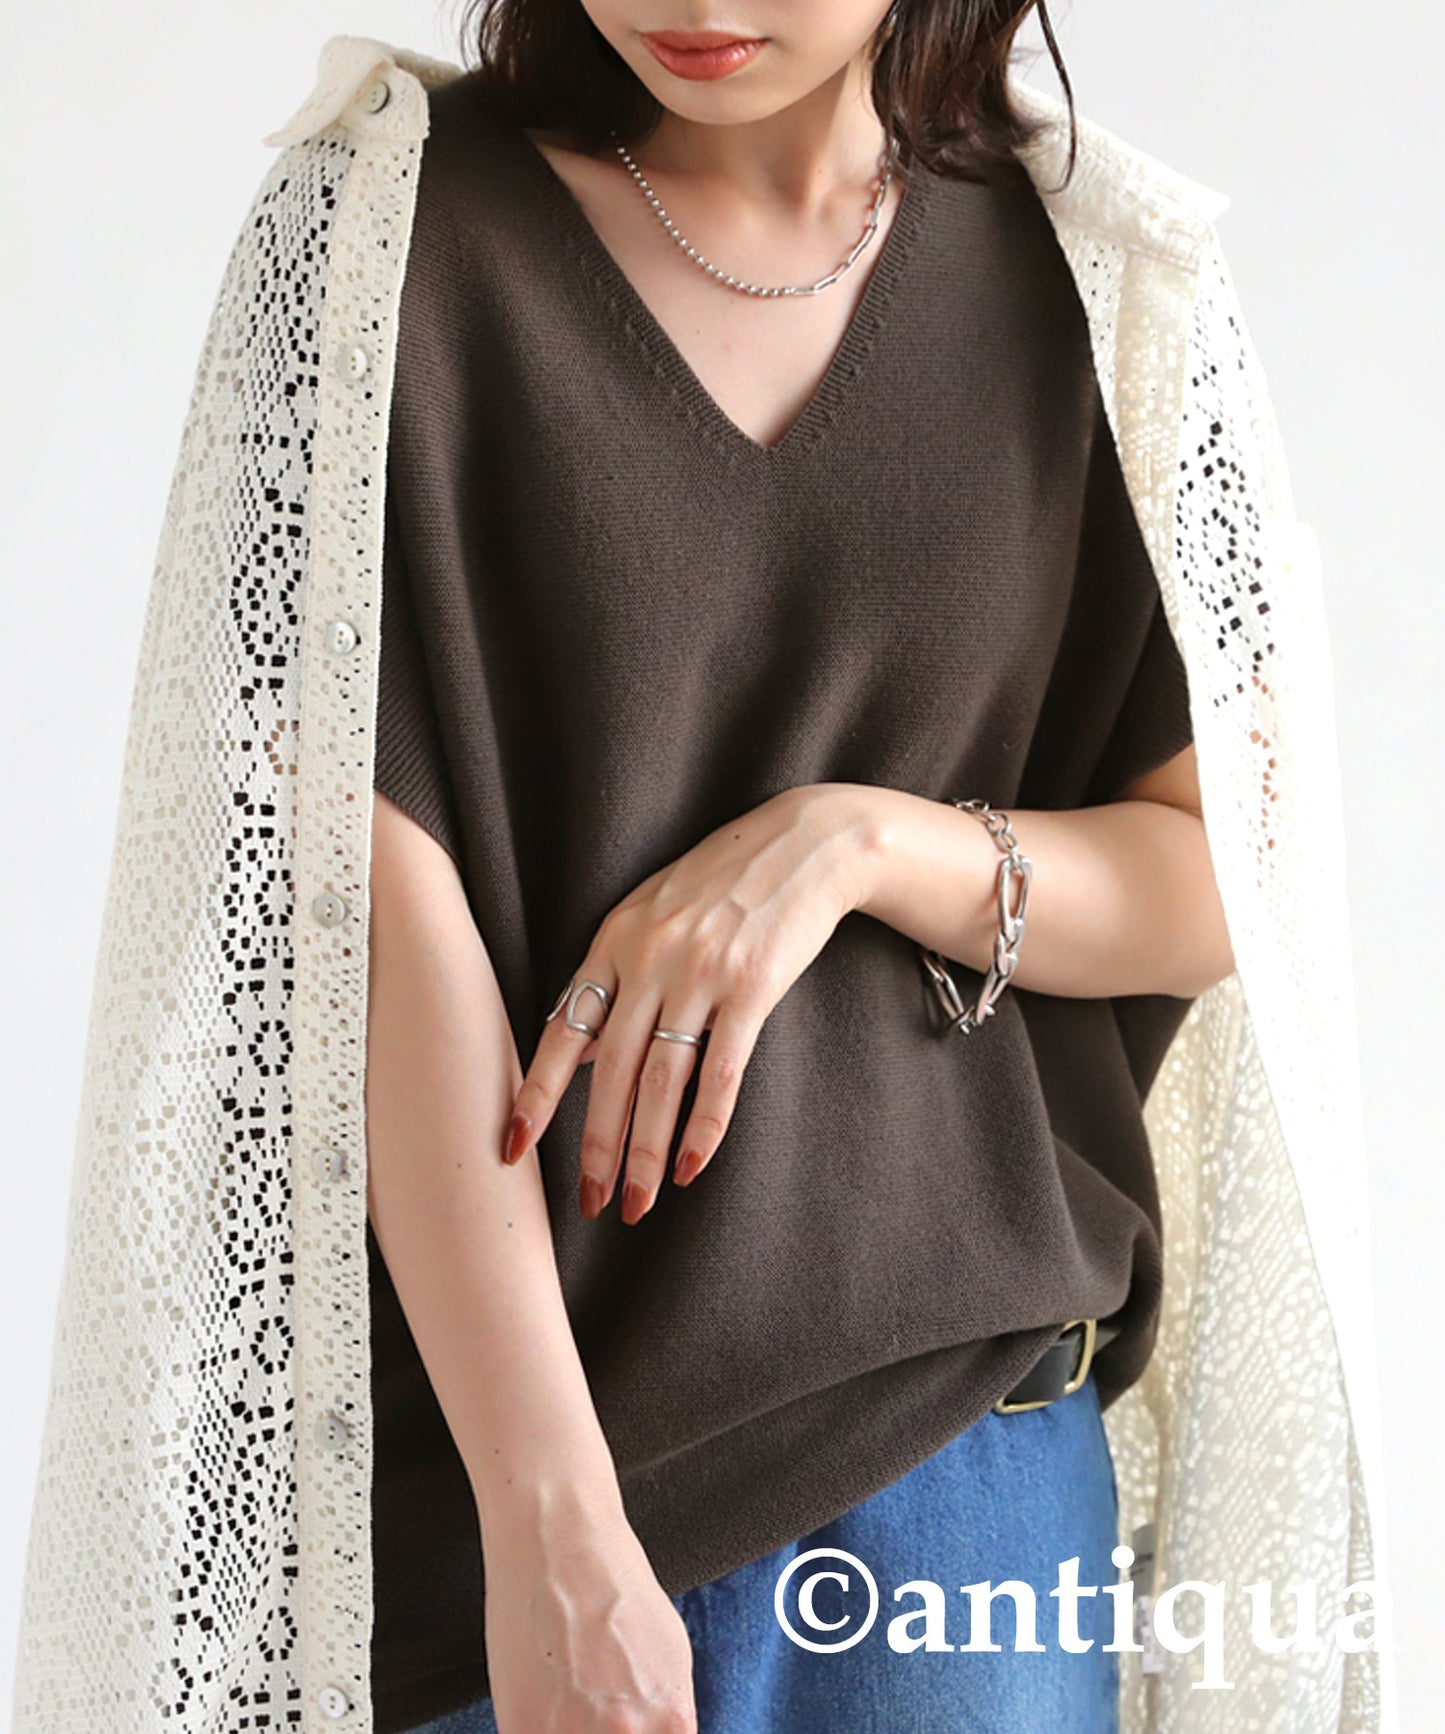 V neck cocoon Ladies knit tops plain